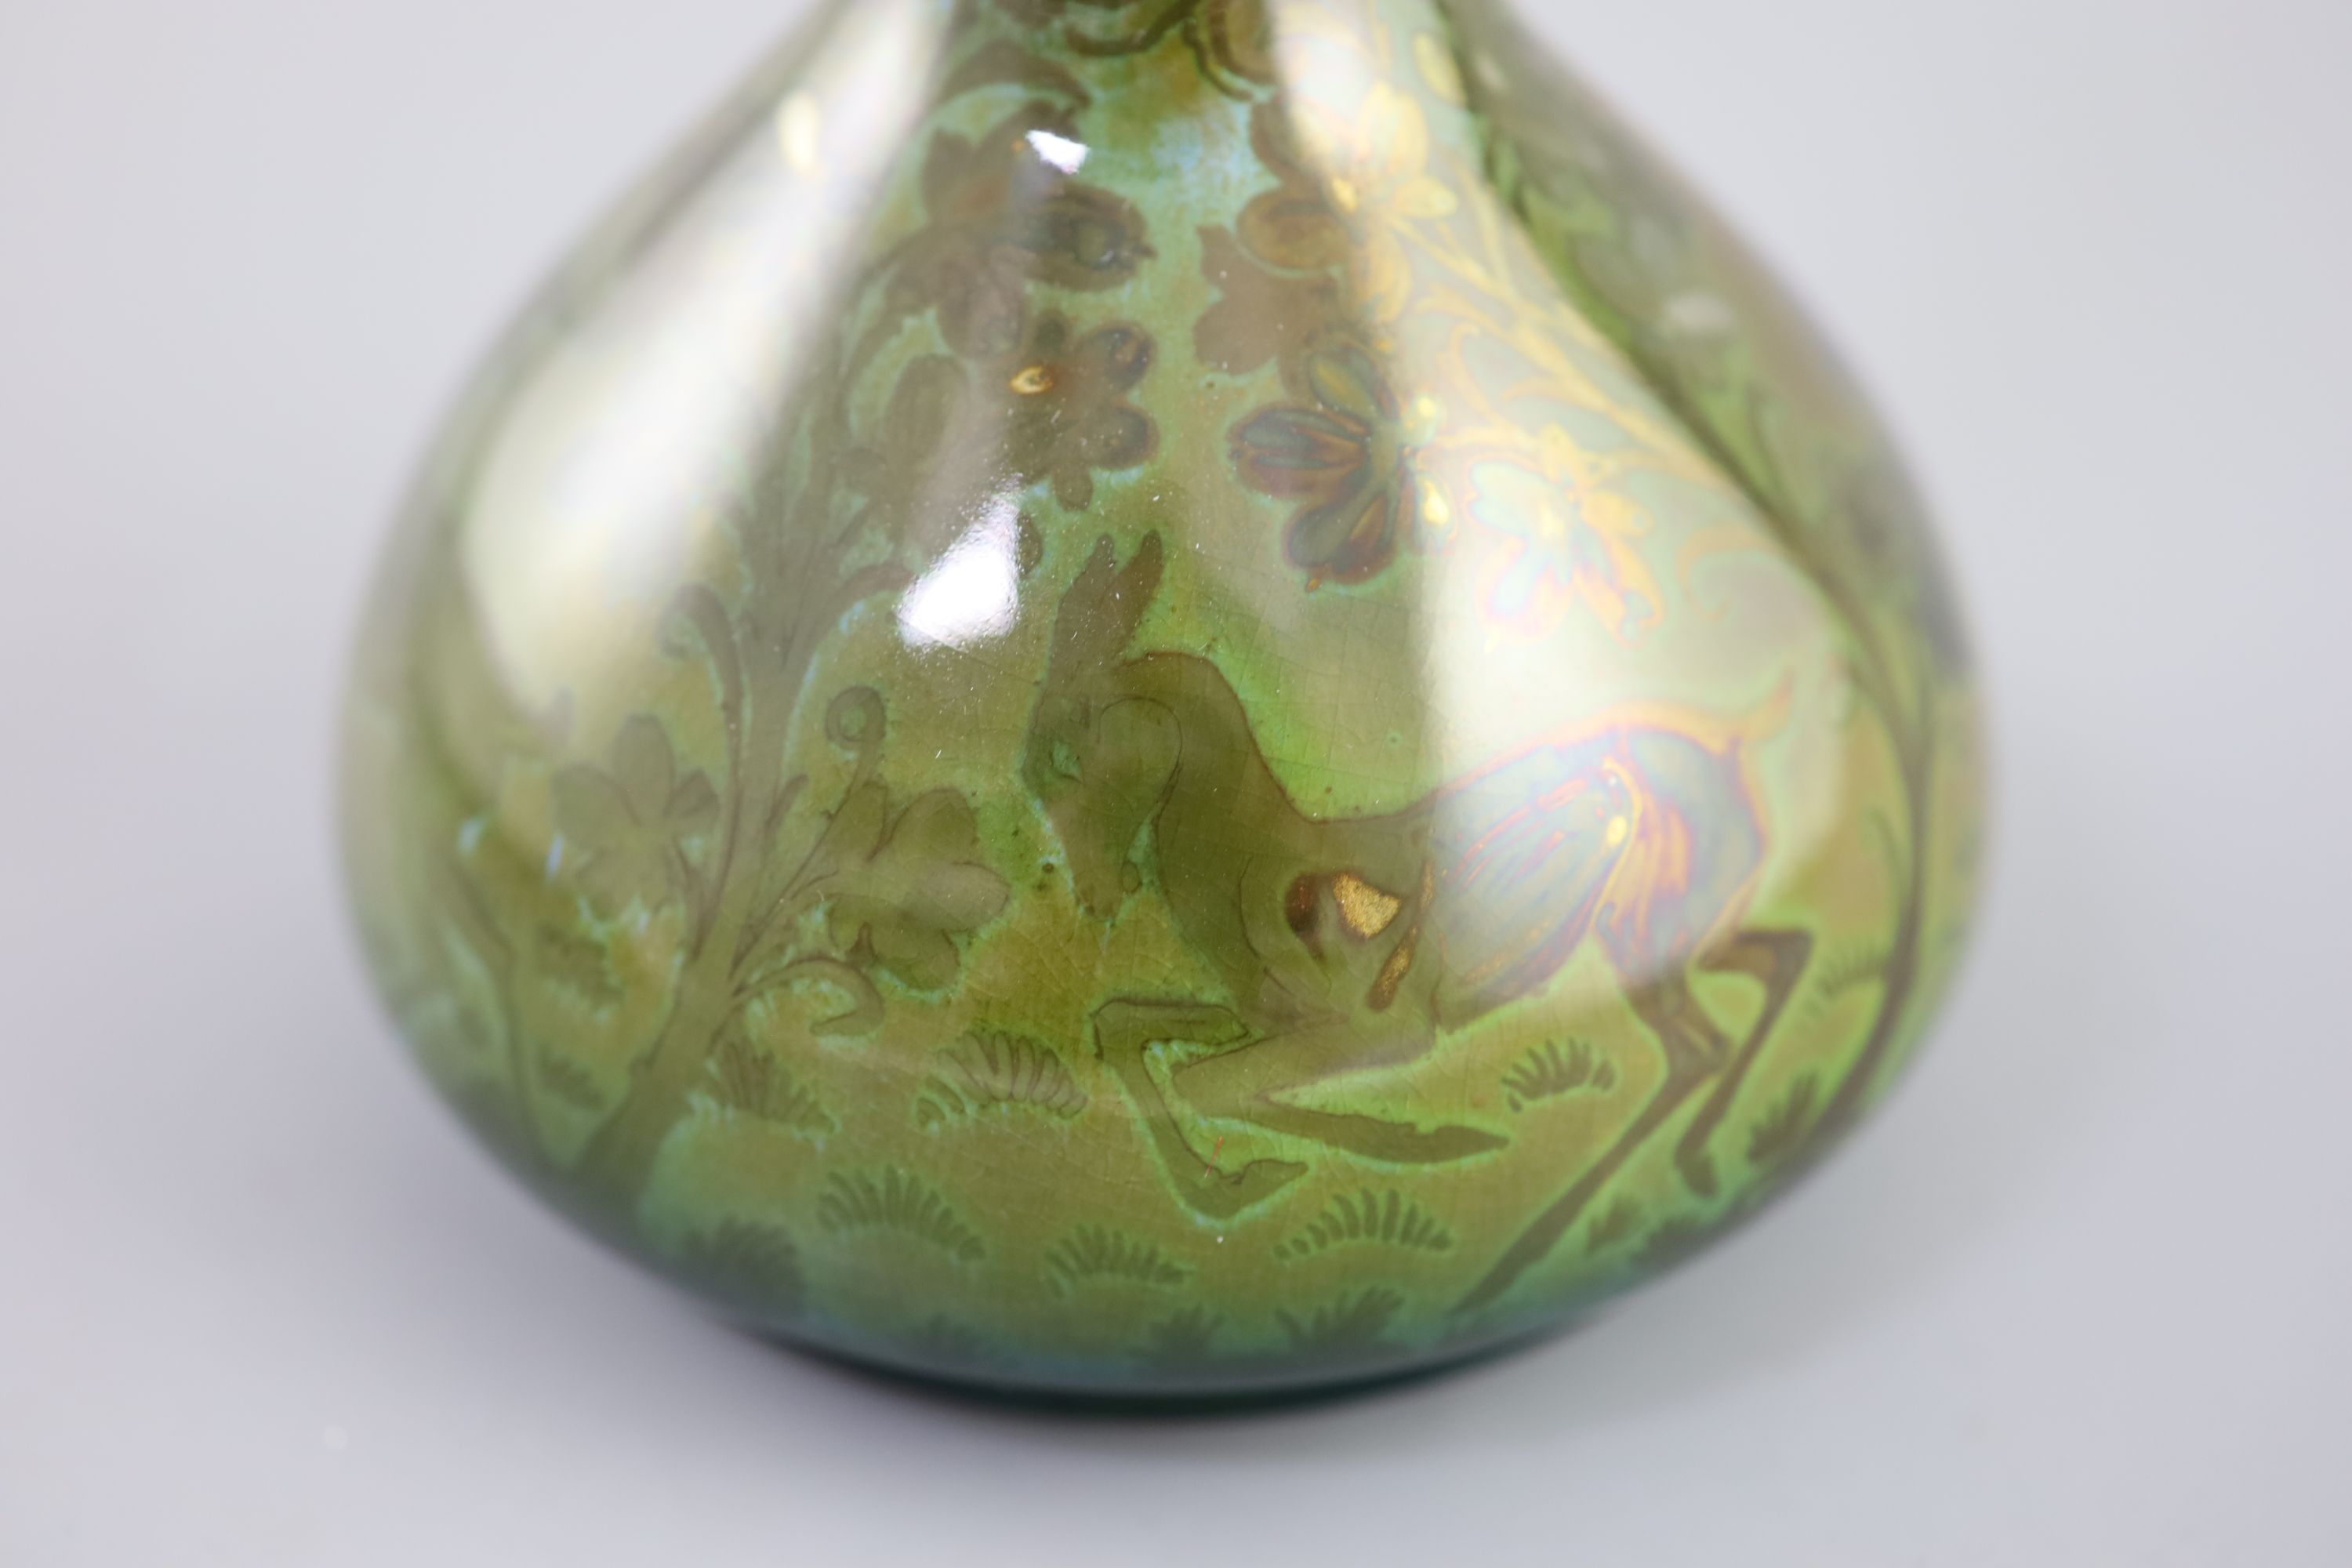 Richard Joyce for Pilkington Royal Lancastrian. A lustre bottle vase, 22.3cm high